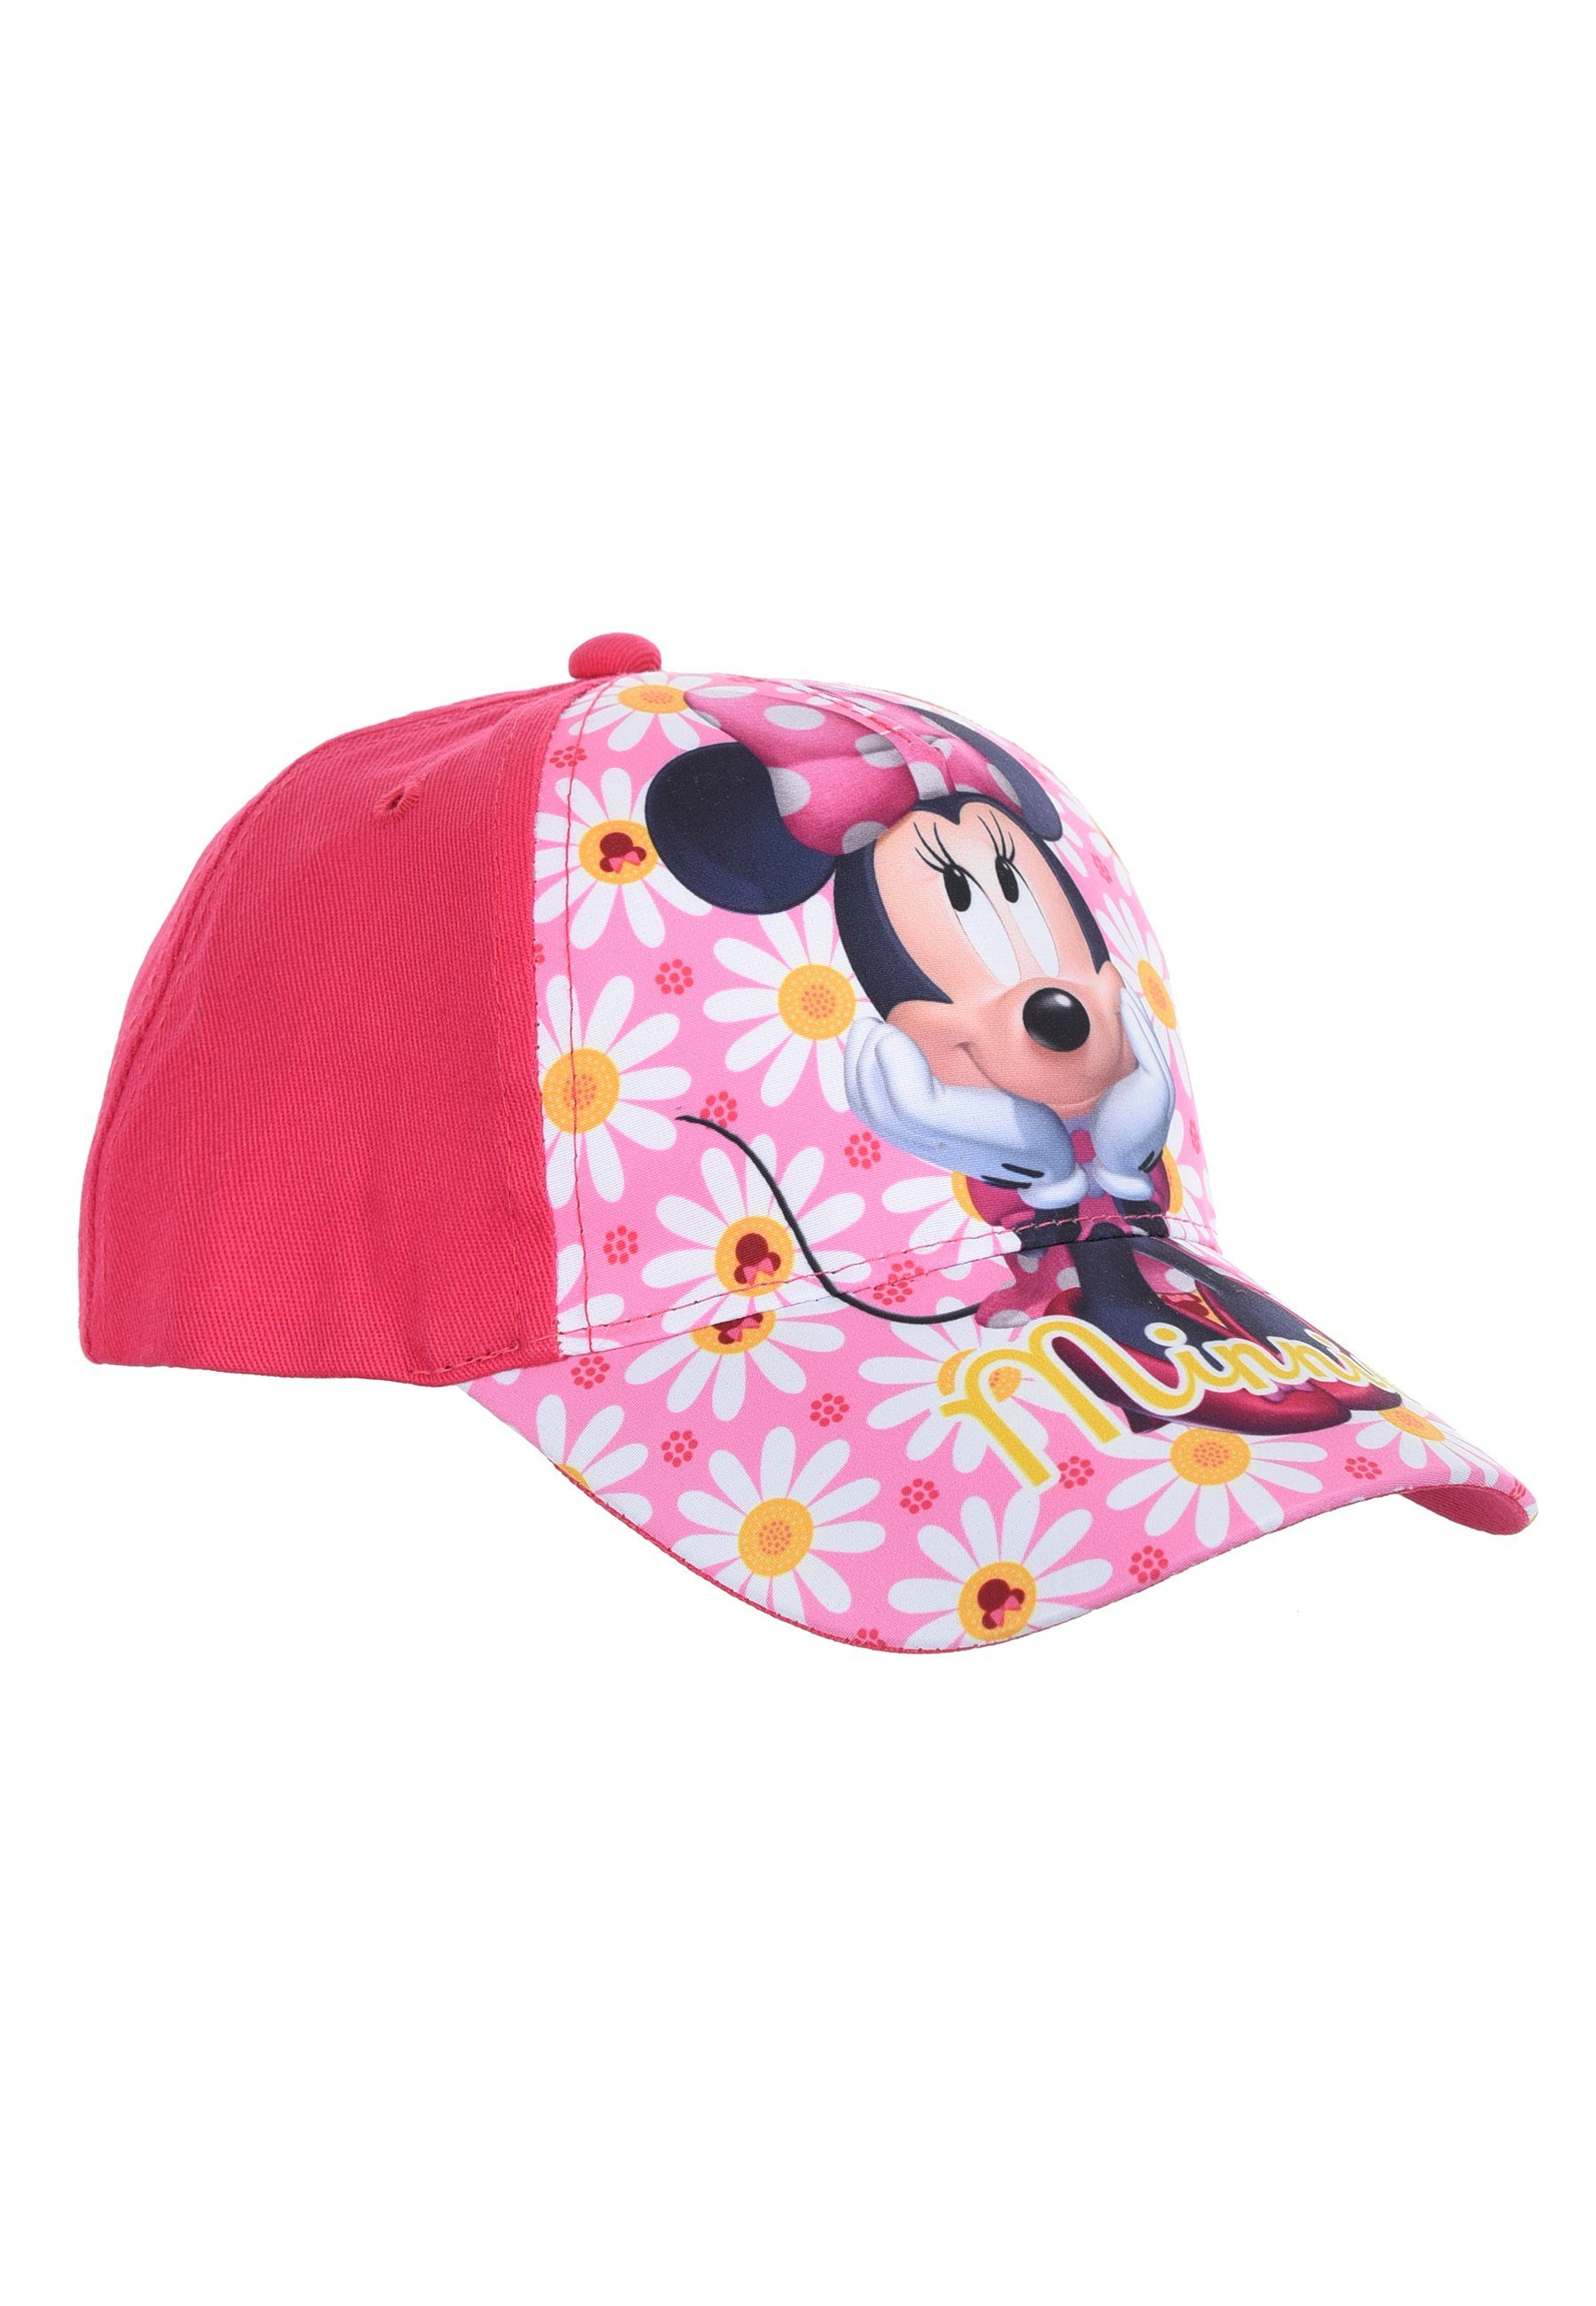 Disney Minnie Mouse Baseball Cap Minnie Kappe Mütze